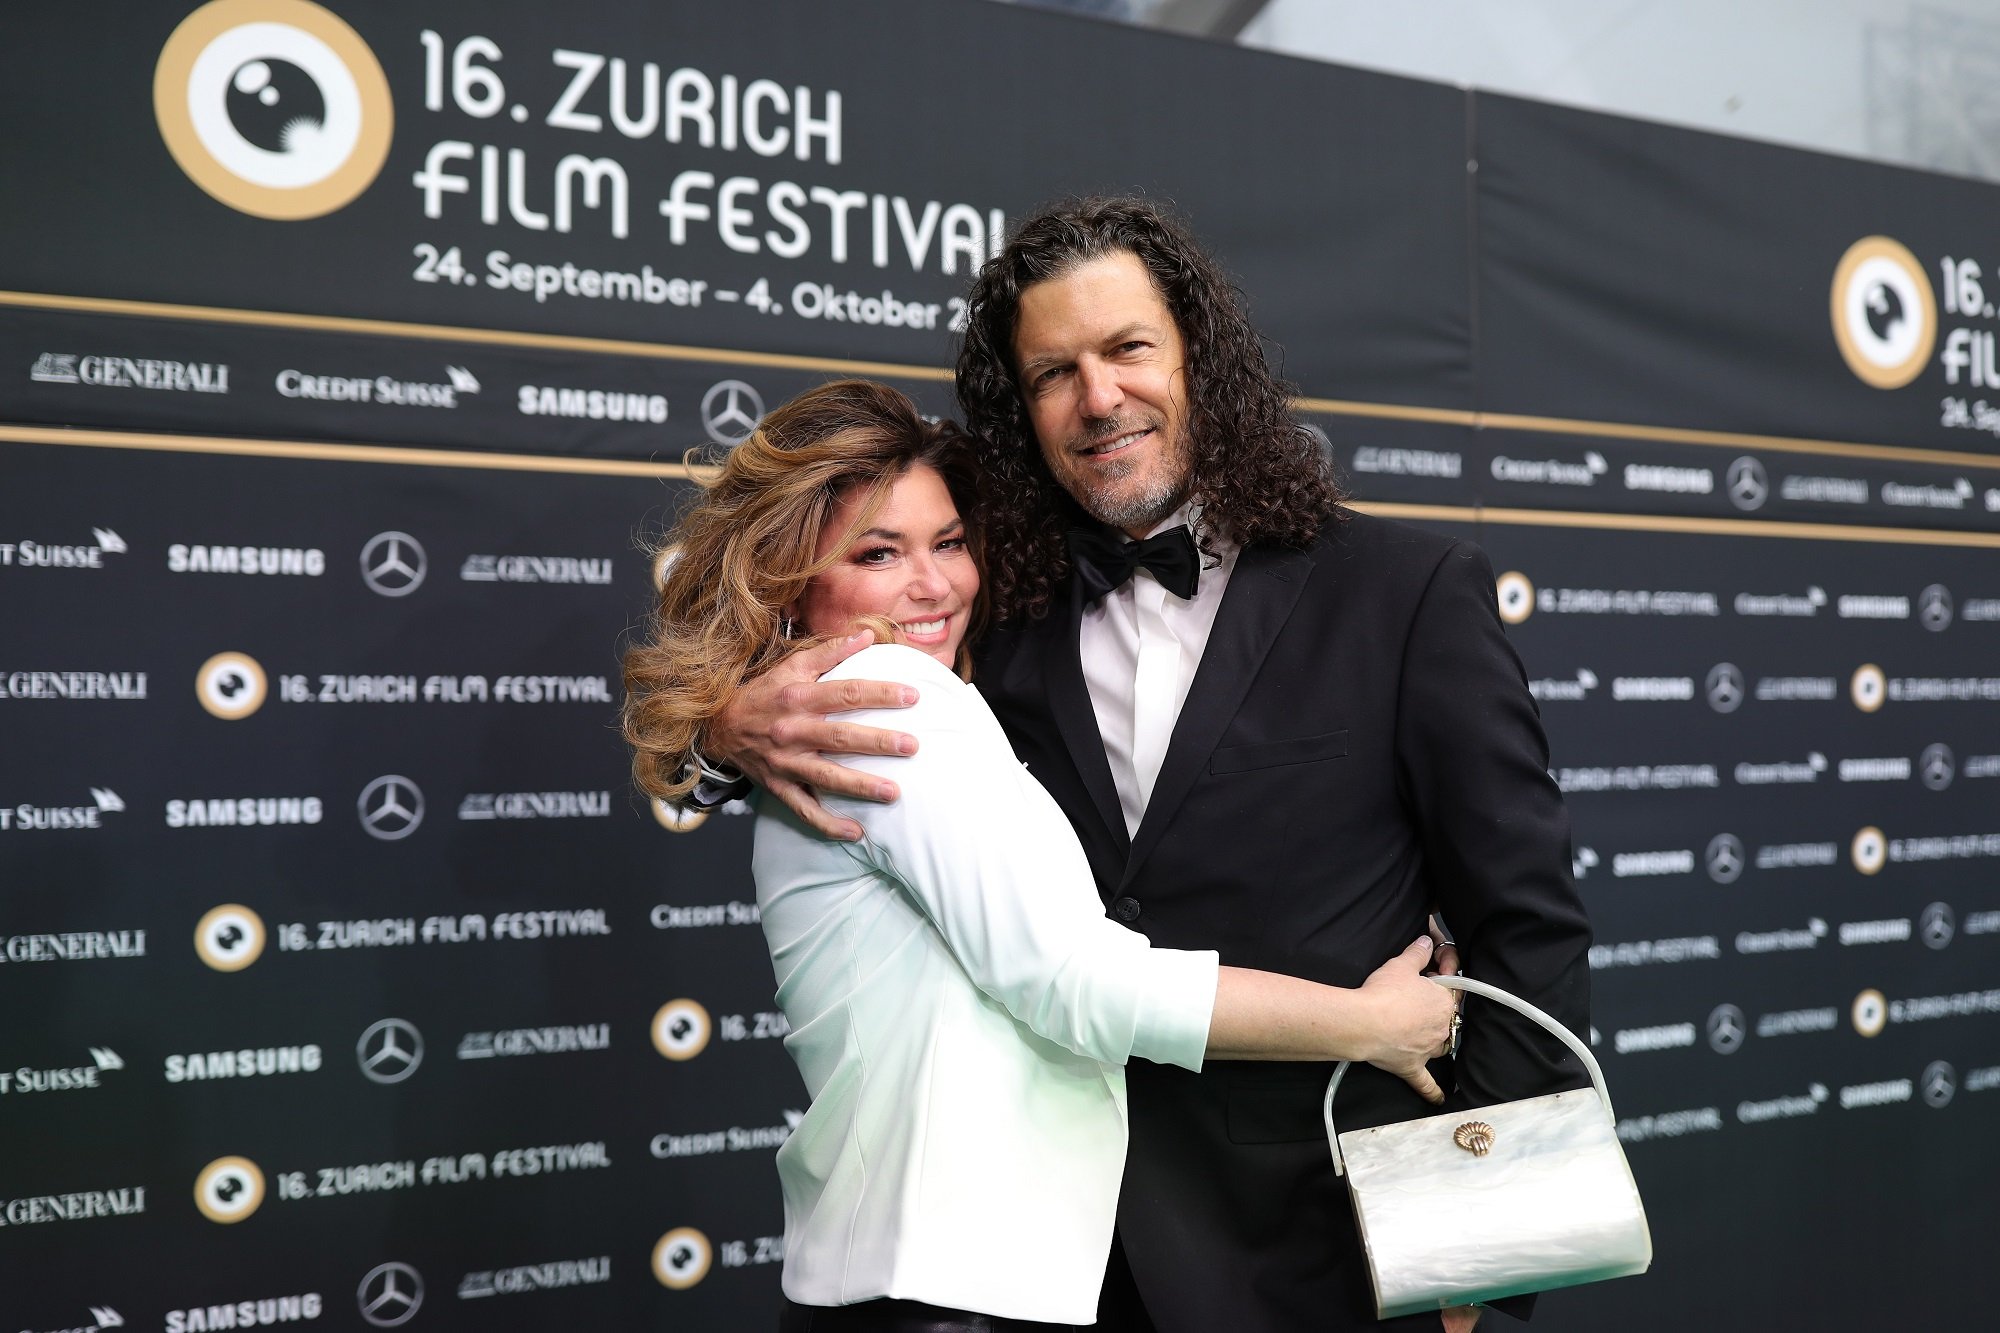 Shania Twain hugs her husband Frédéric Thiébaud at the 16th Zurich Film Festival